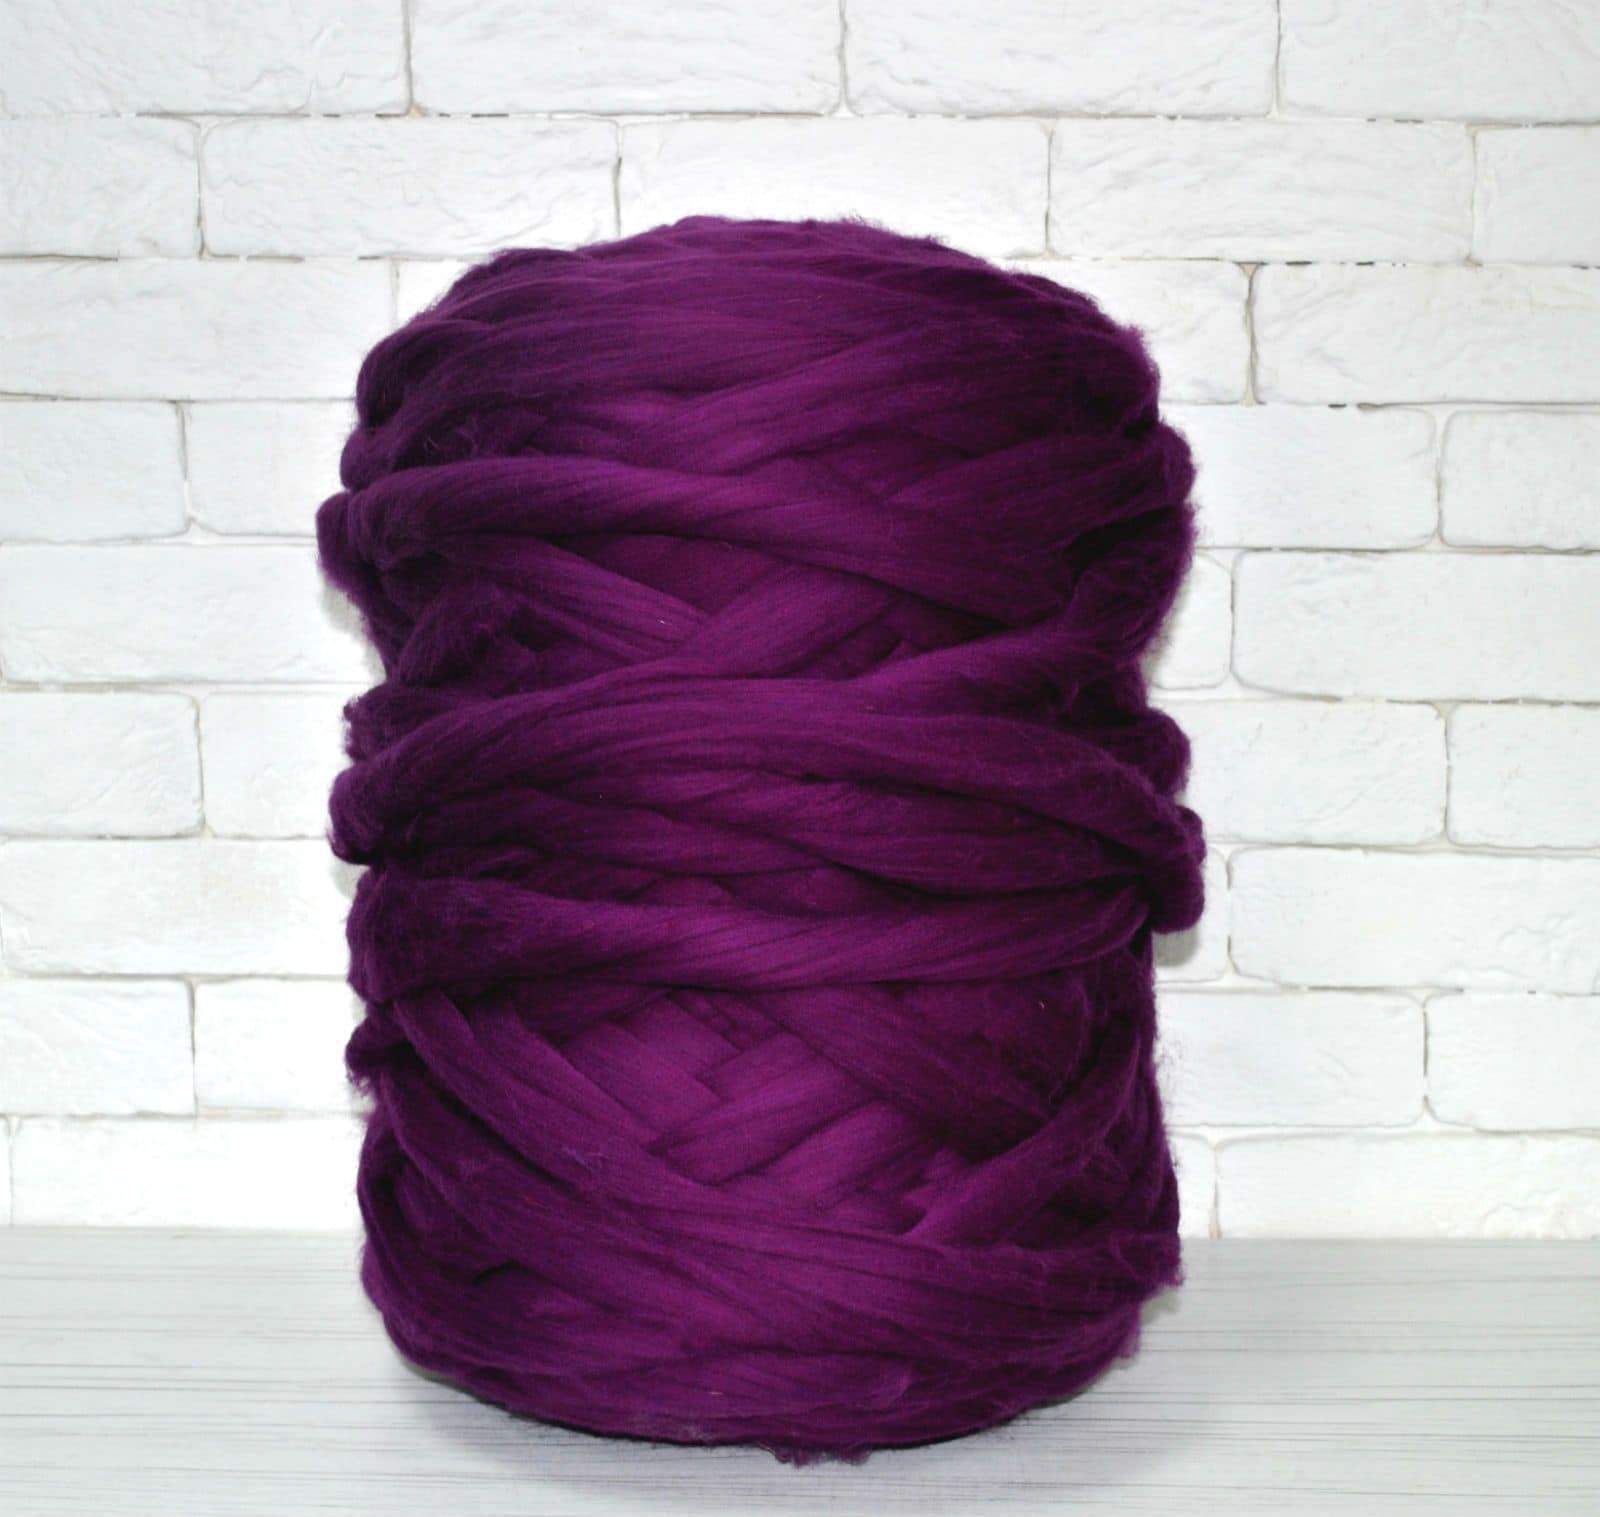 Bulky Wool Yarn Chunky Arm Knitting Blankets Super Soft Giant Ball